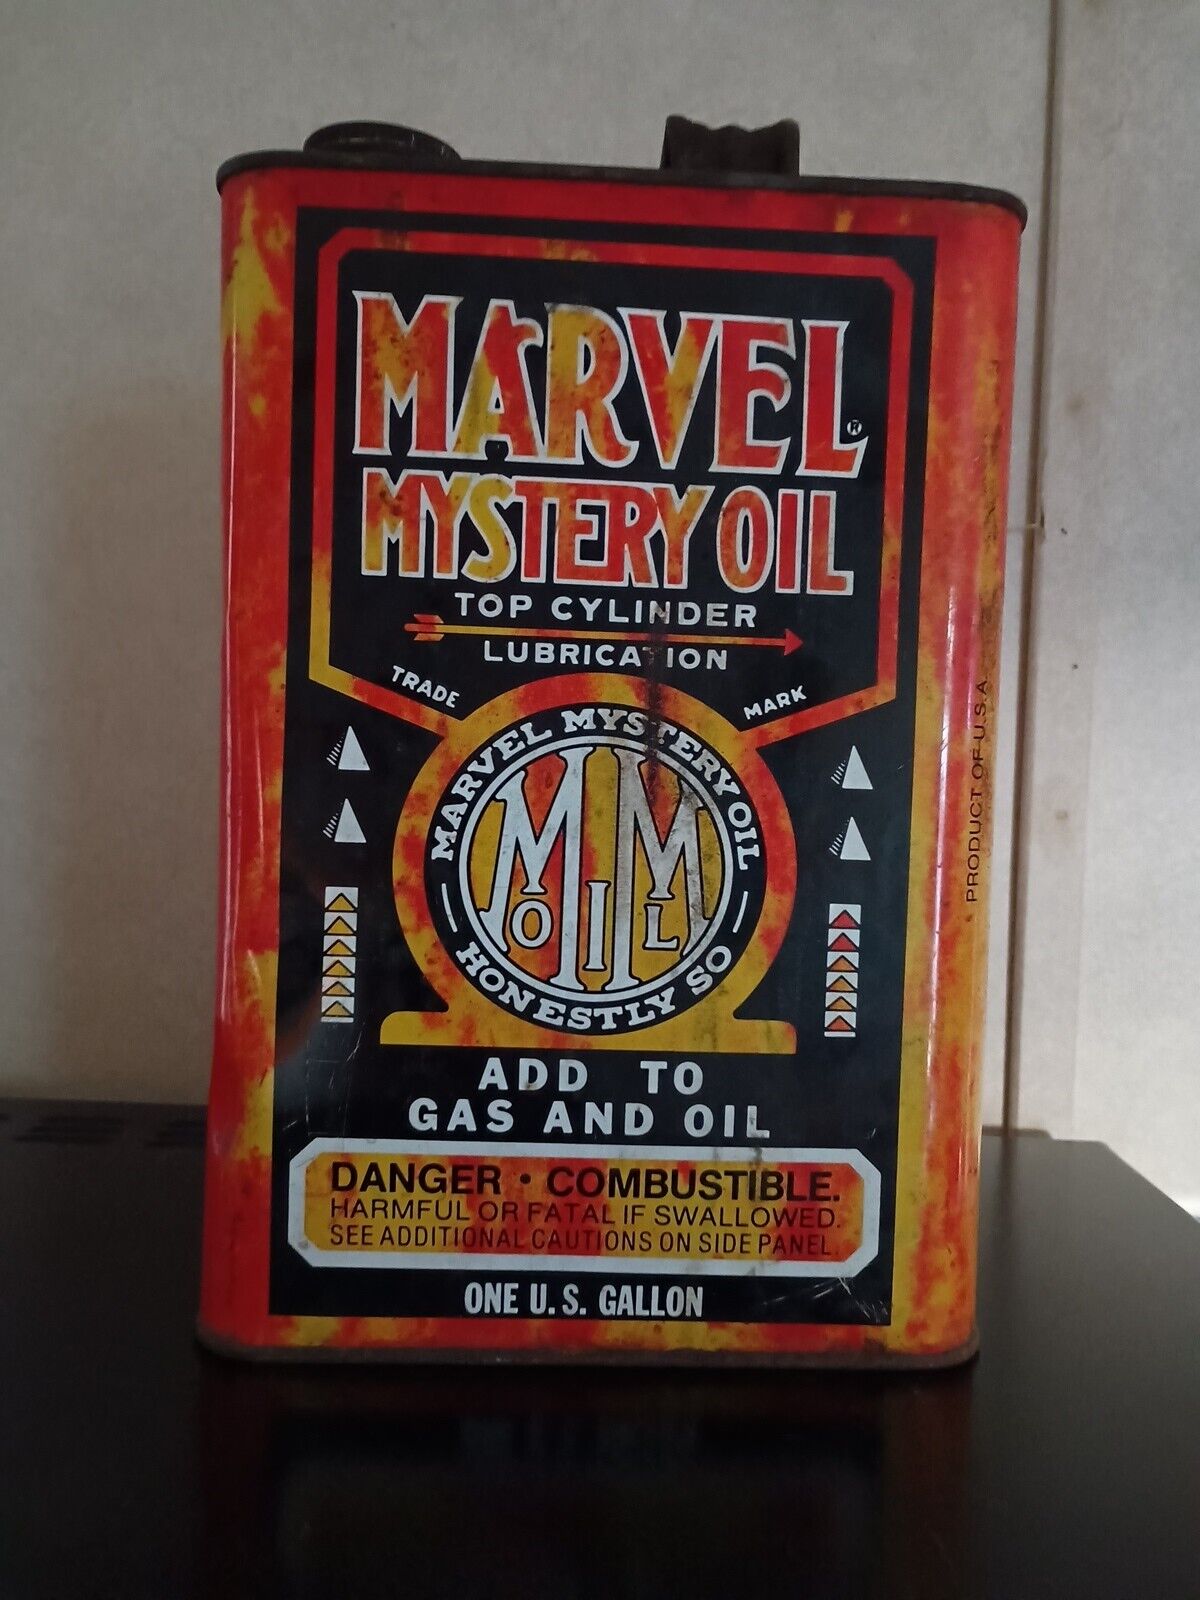 Vintage 1950's MARVEL MYSTERY Oil Can 1 Gallon - Gas & Oil---EMPTY